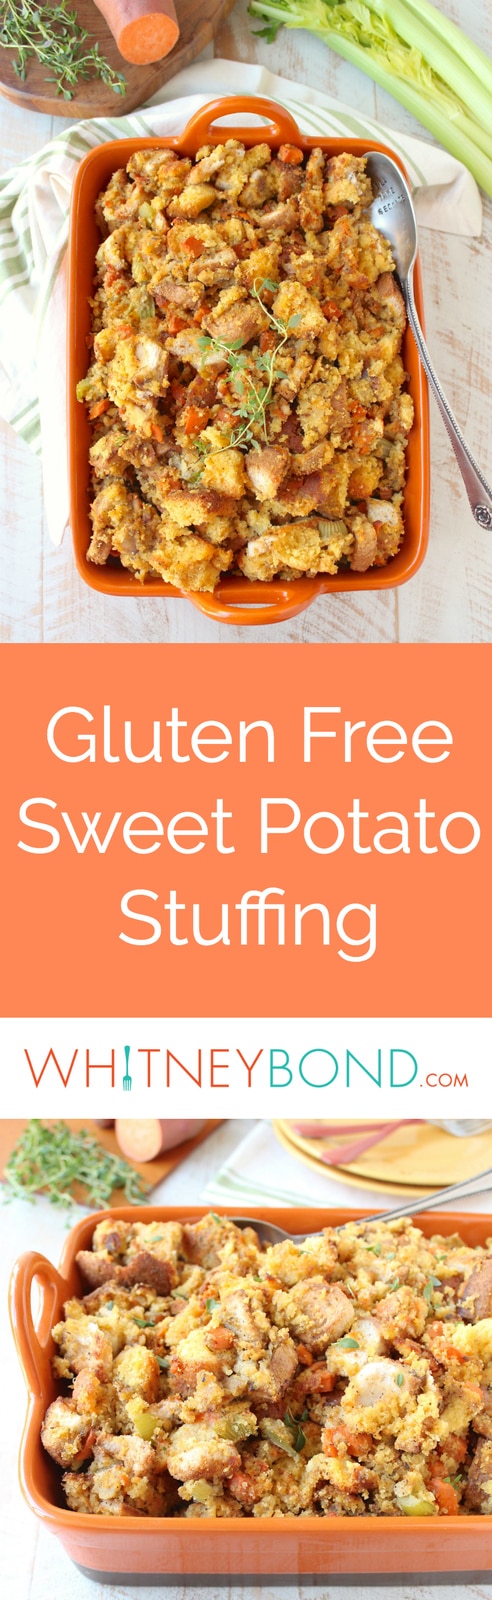 Gluten Free Stuffing Recipe with Sweet Potatoes - WhitneyBond.com